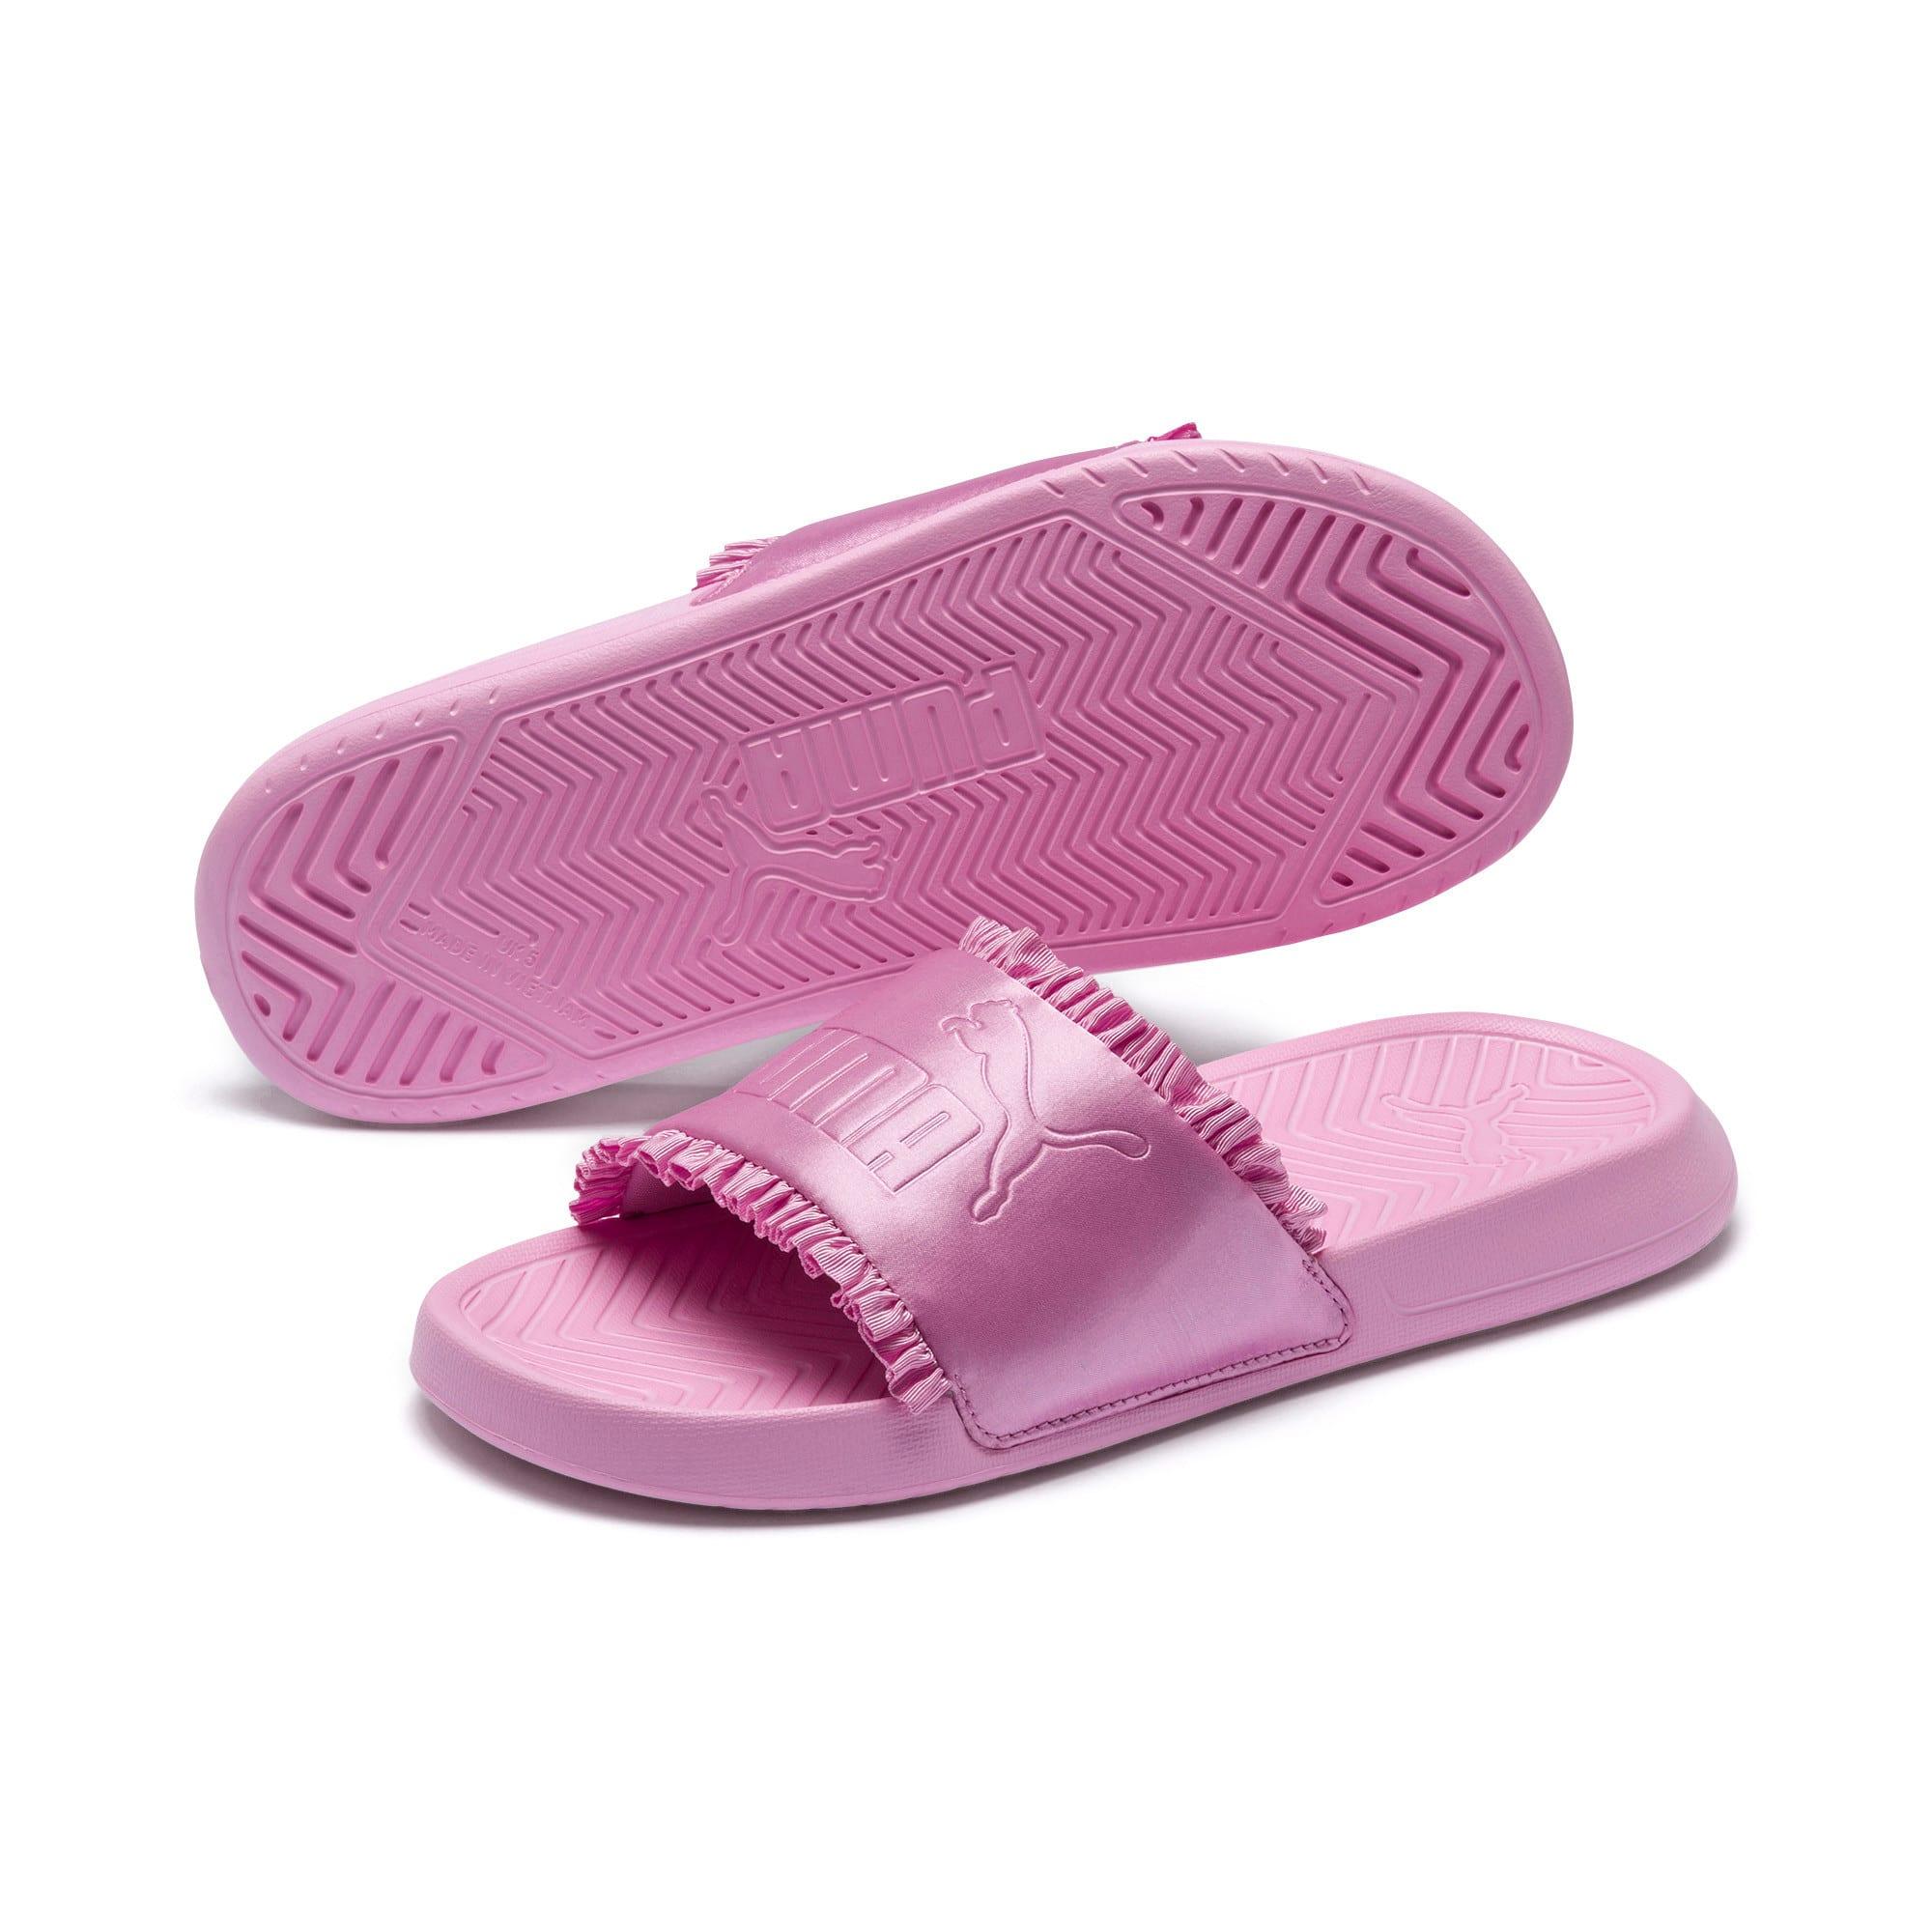 puma flip flops pink, OFF 71%,Buy!